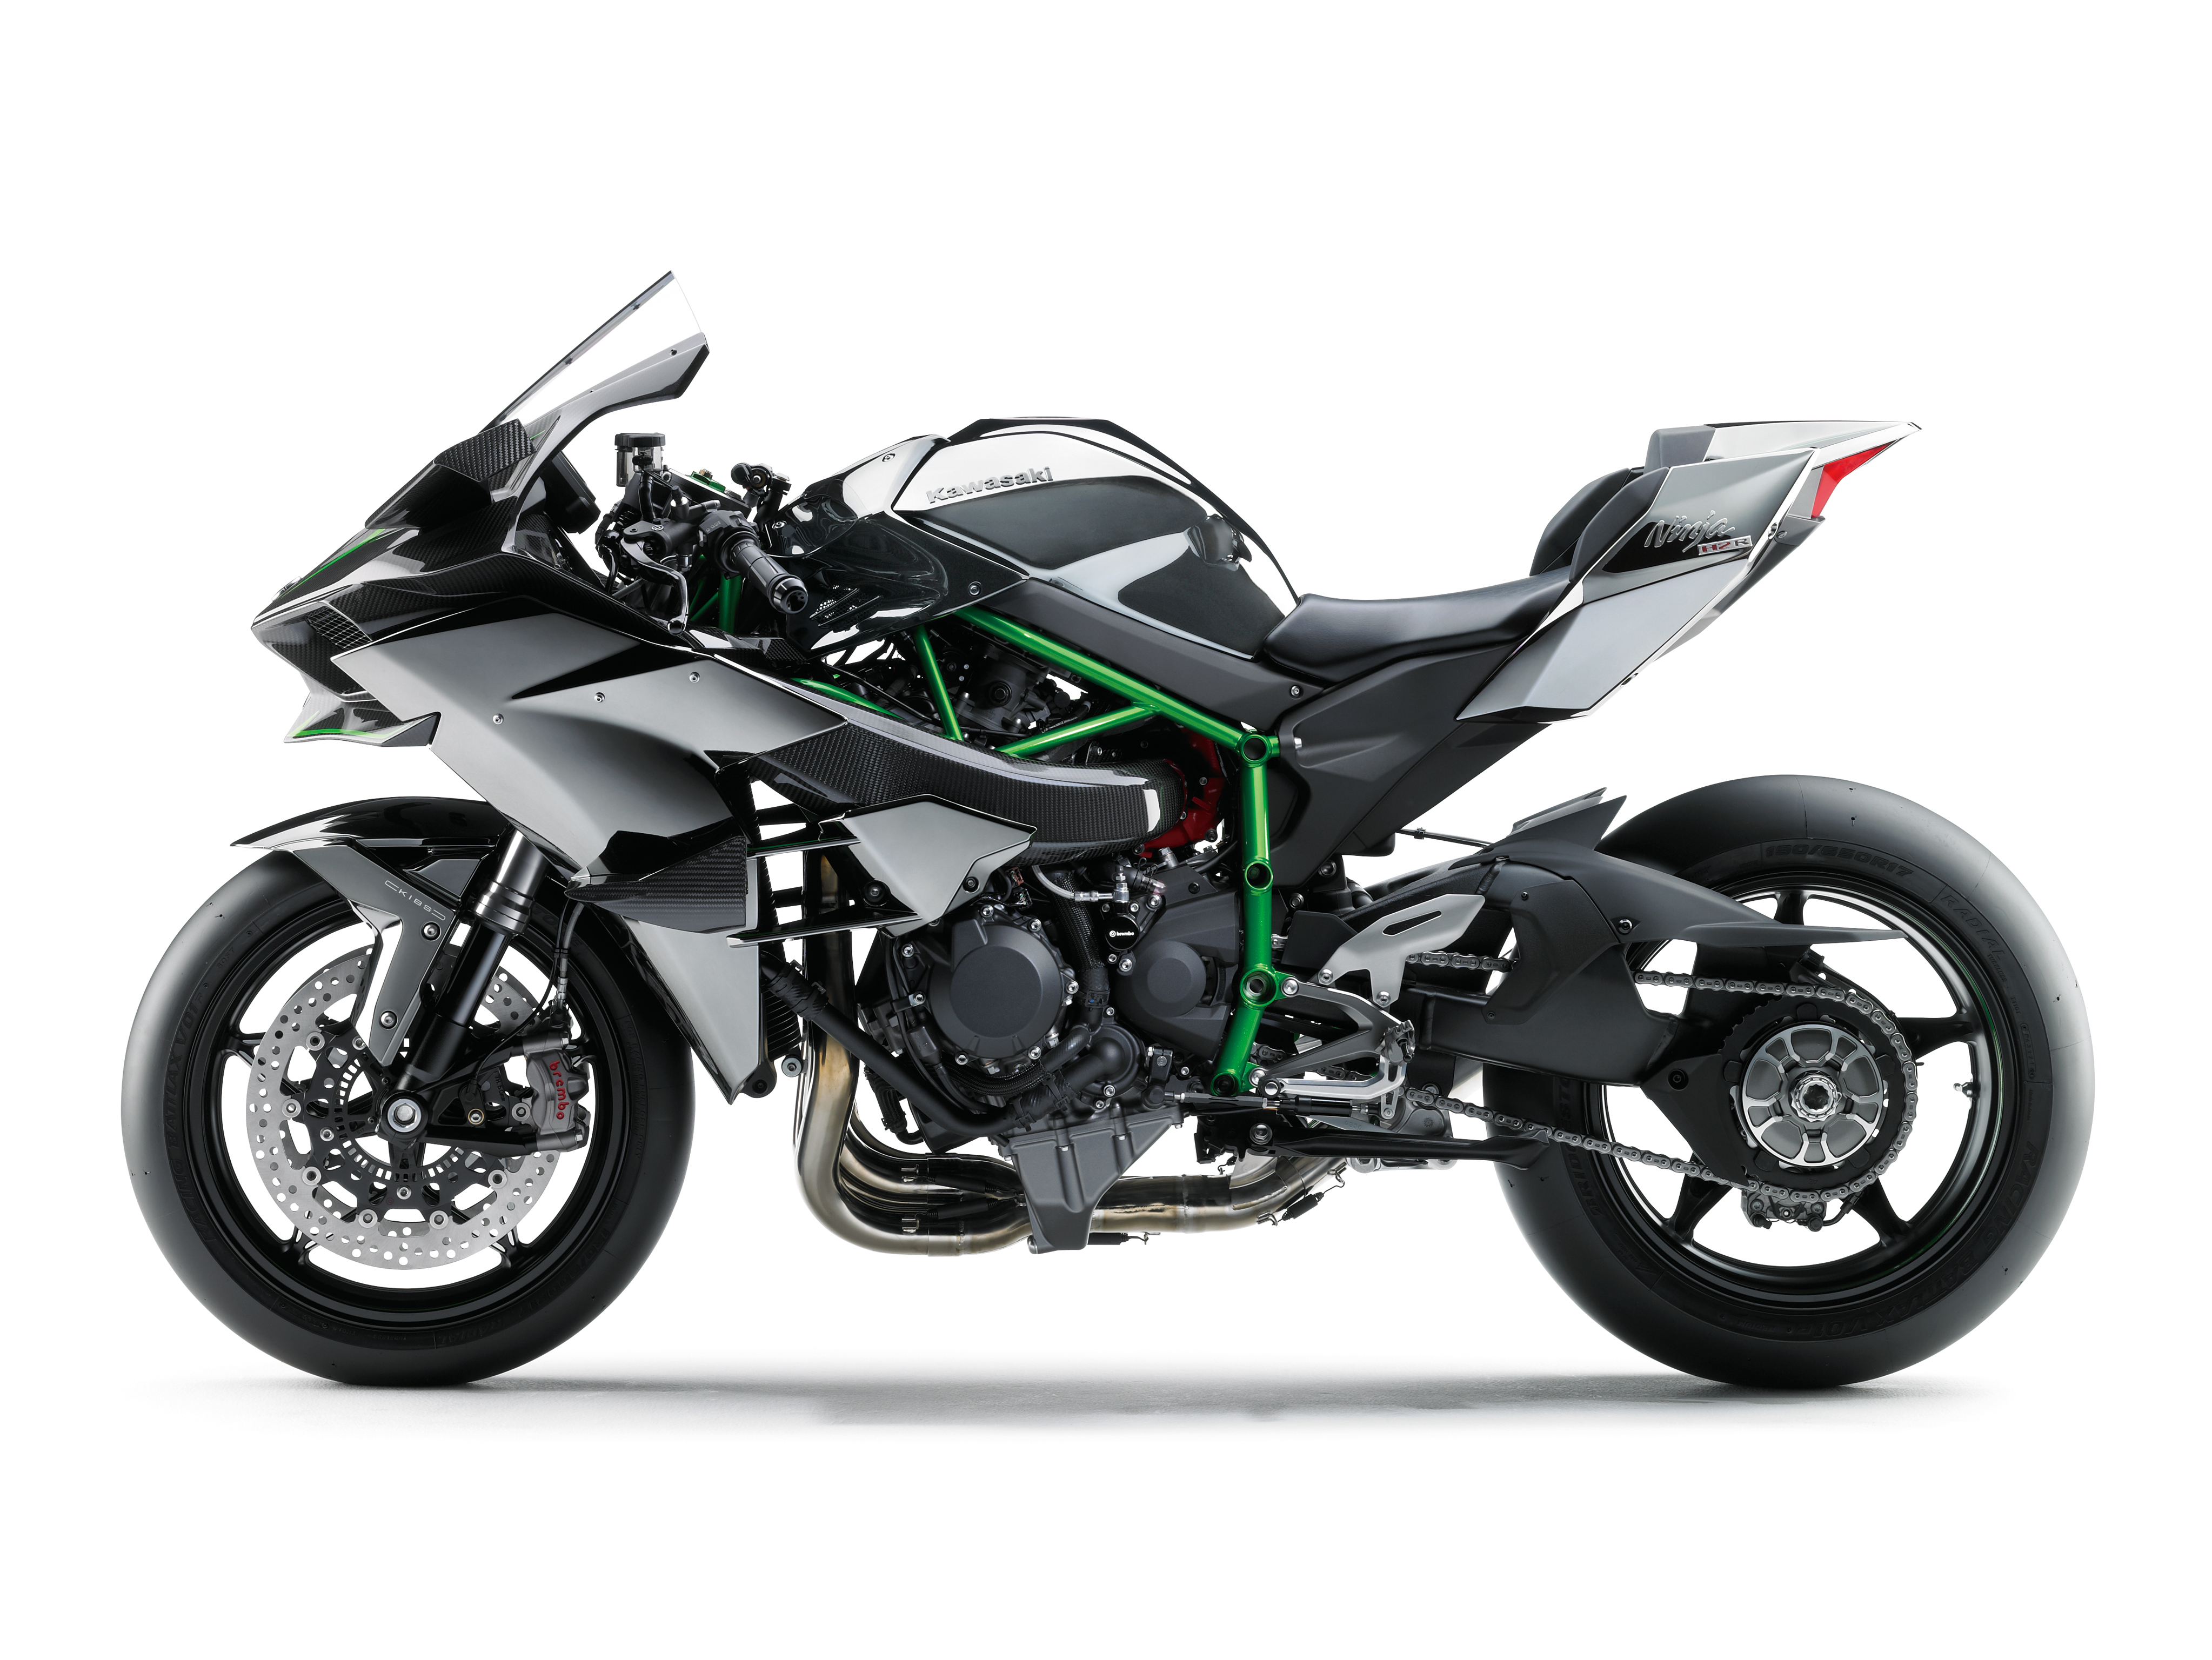 Kawasaki Ninja H2 UK price and final specs confirmed